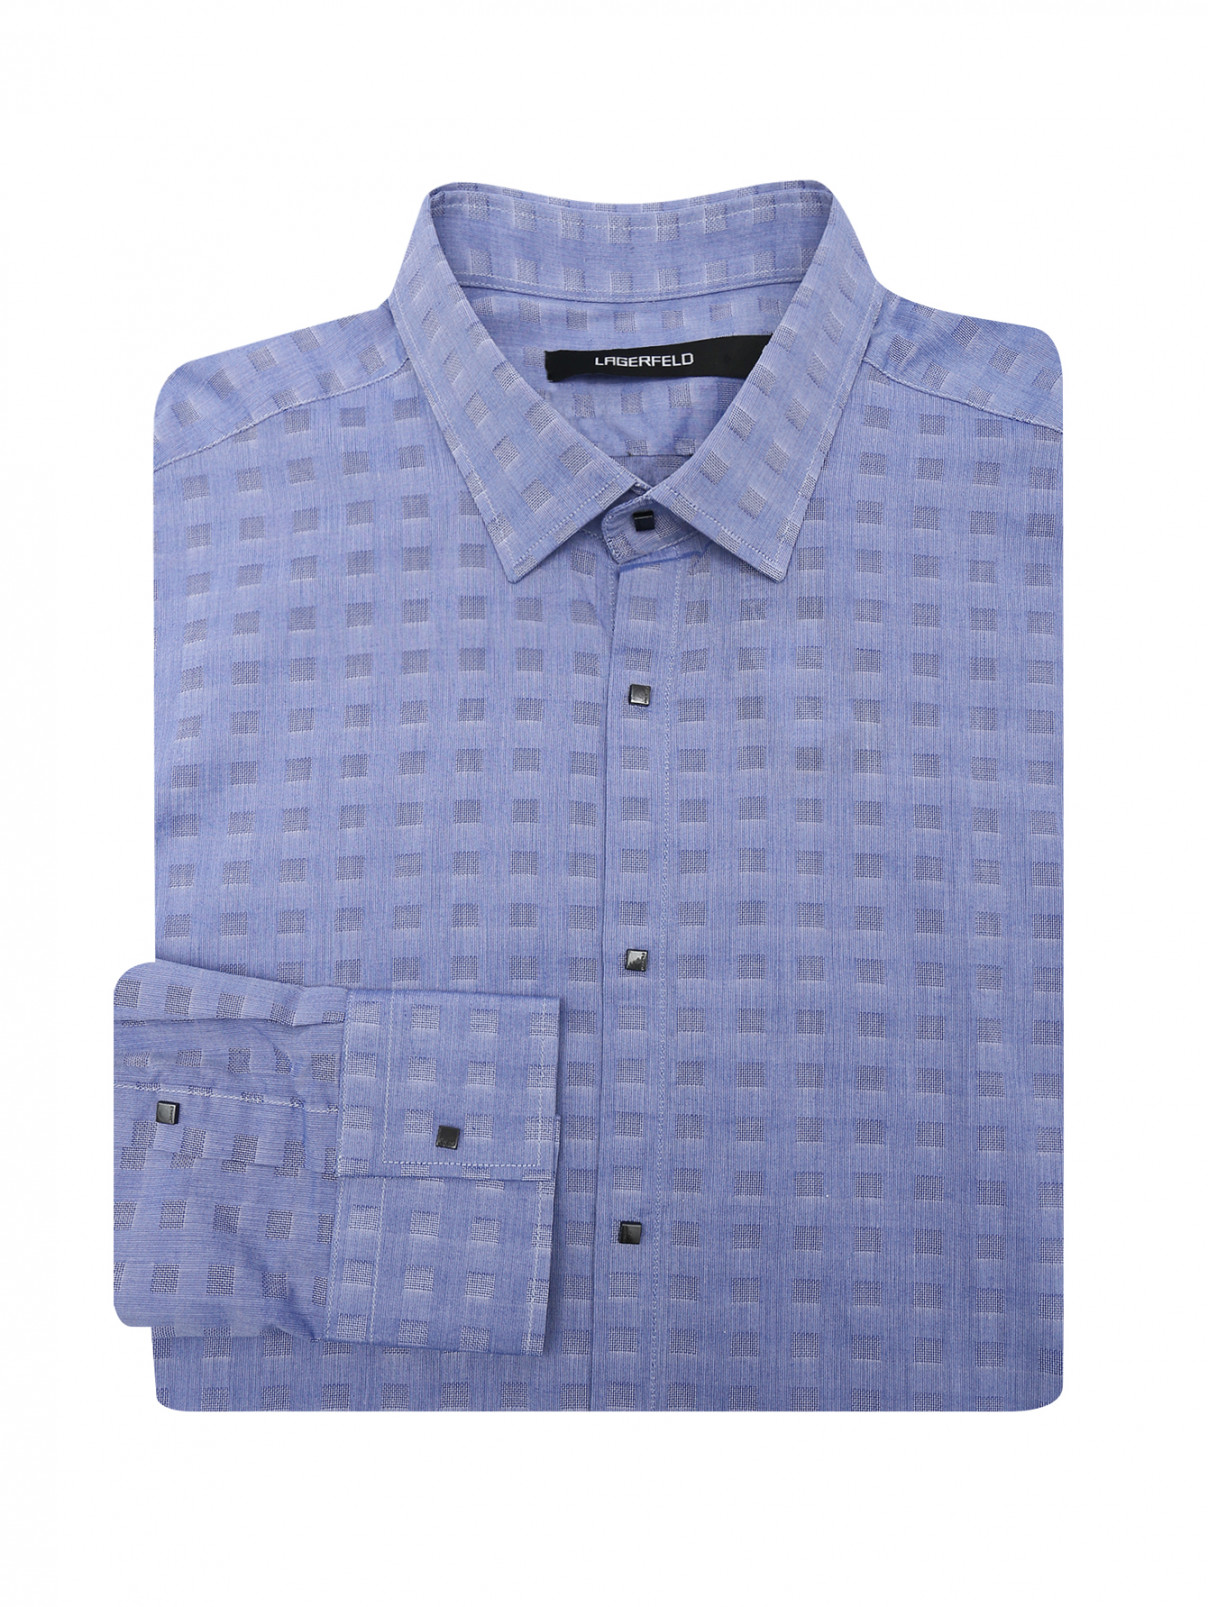 Рубашка из хлопка с узором Lagerfeld  –  Общий вид  – Цвет:  Узор